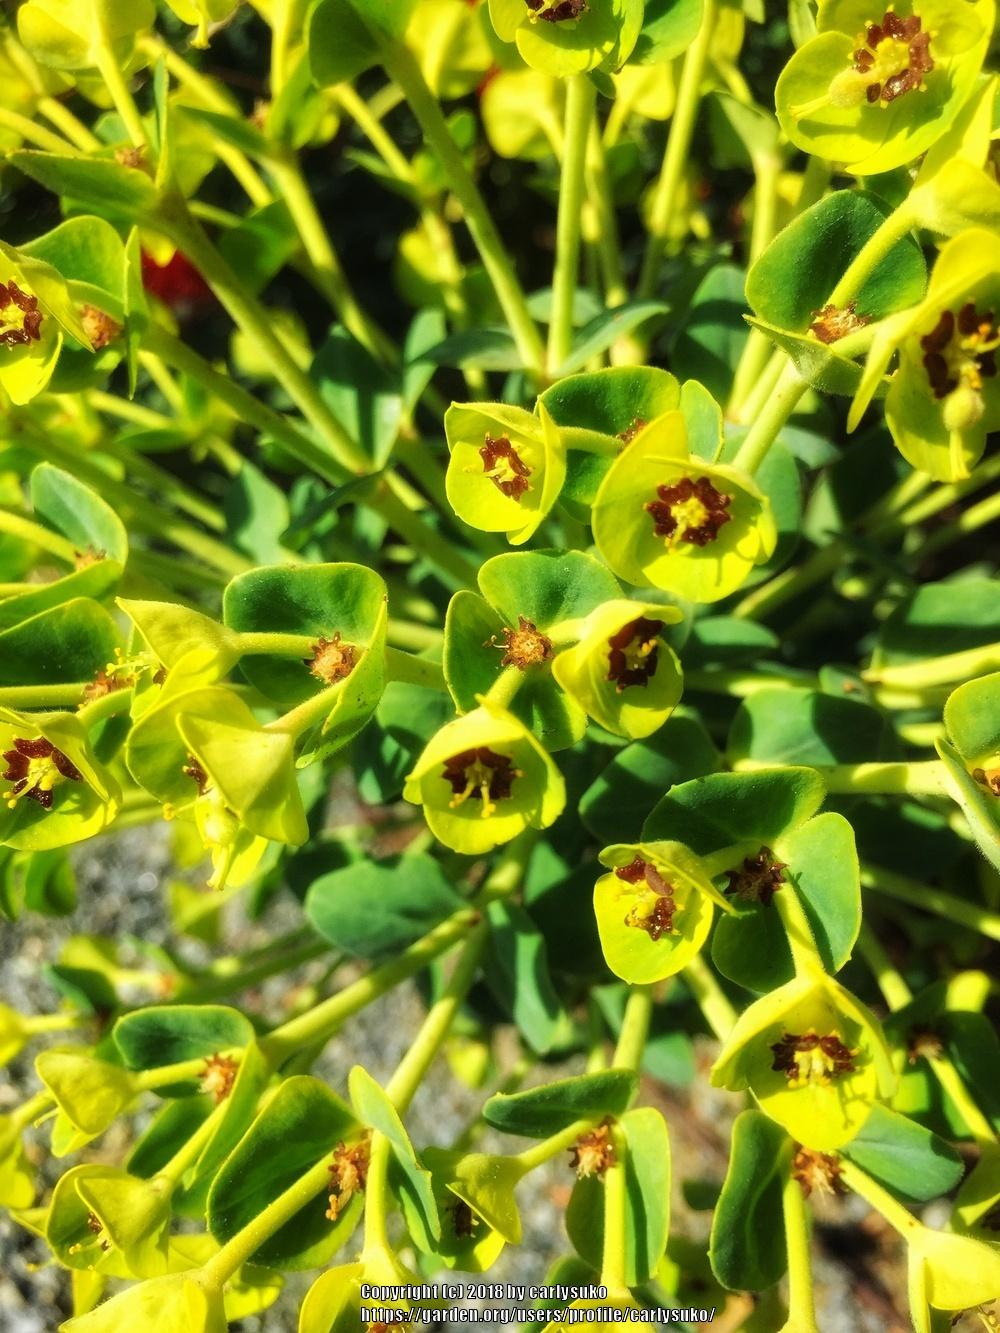 Photo of Euphorbias (Euphorbia) uploaded by carlysuko